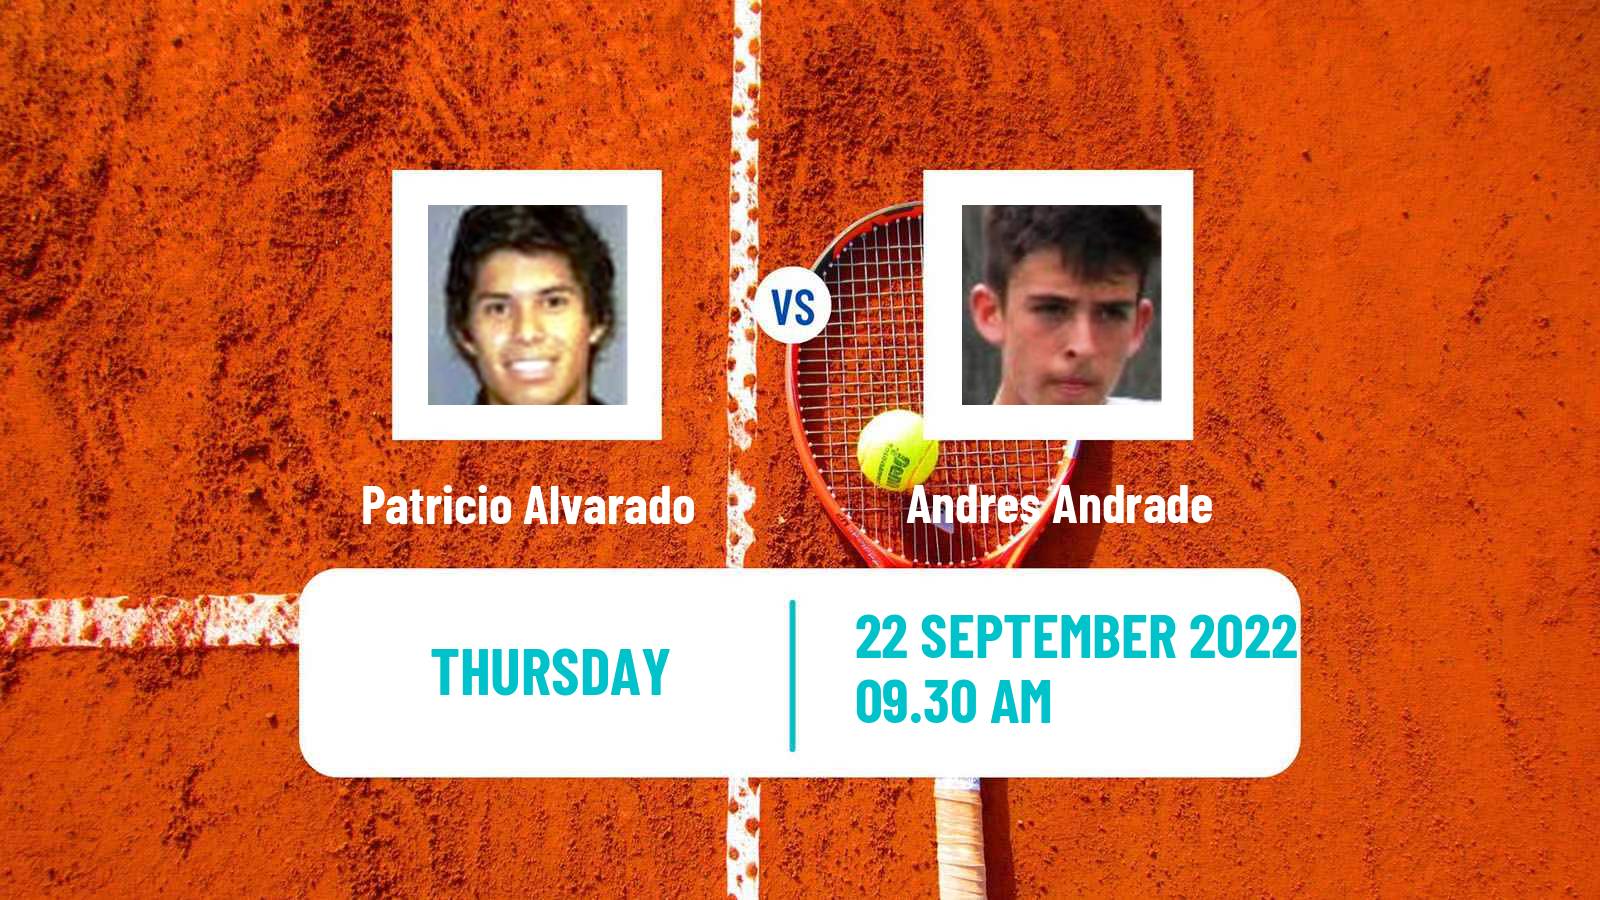 Tennis ITF Tournaments Patricio Alvarado - Andres Andrade